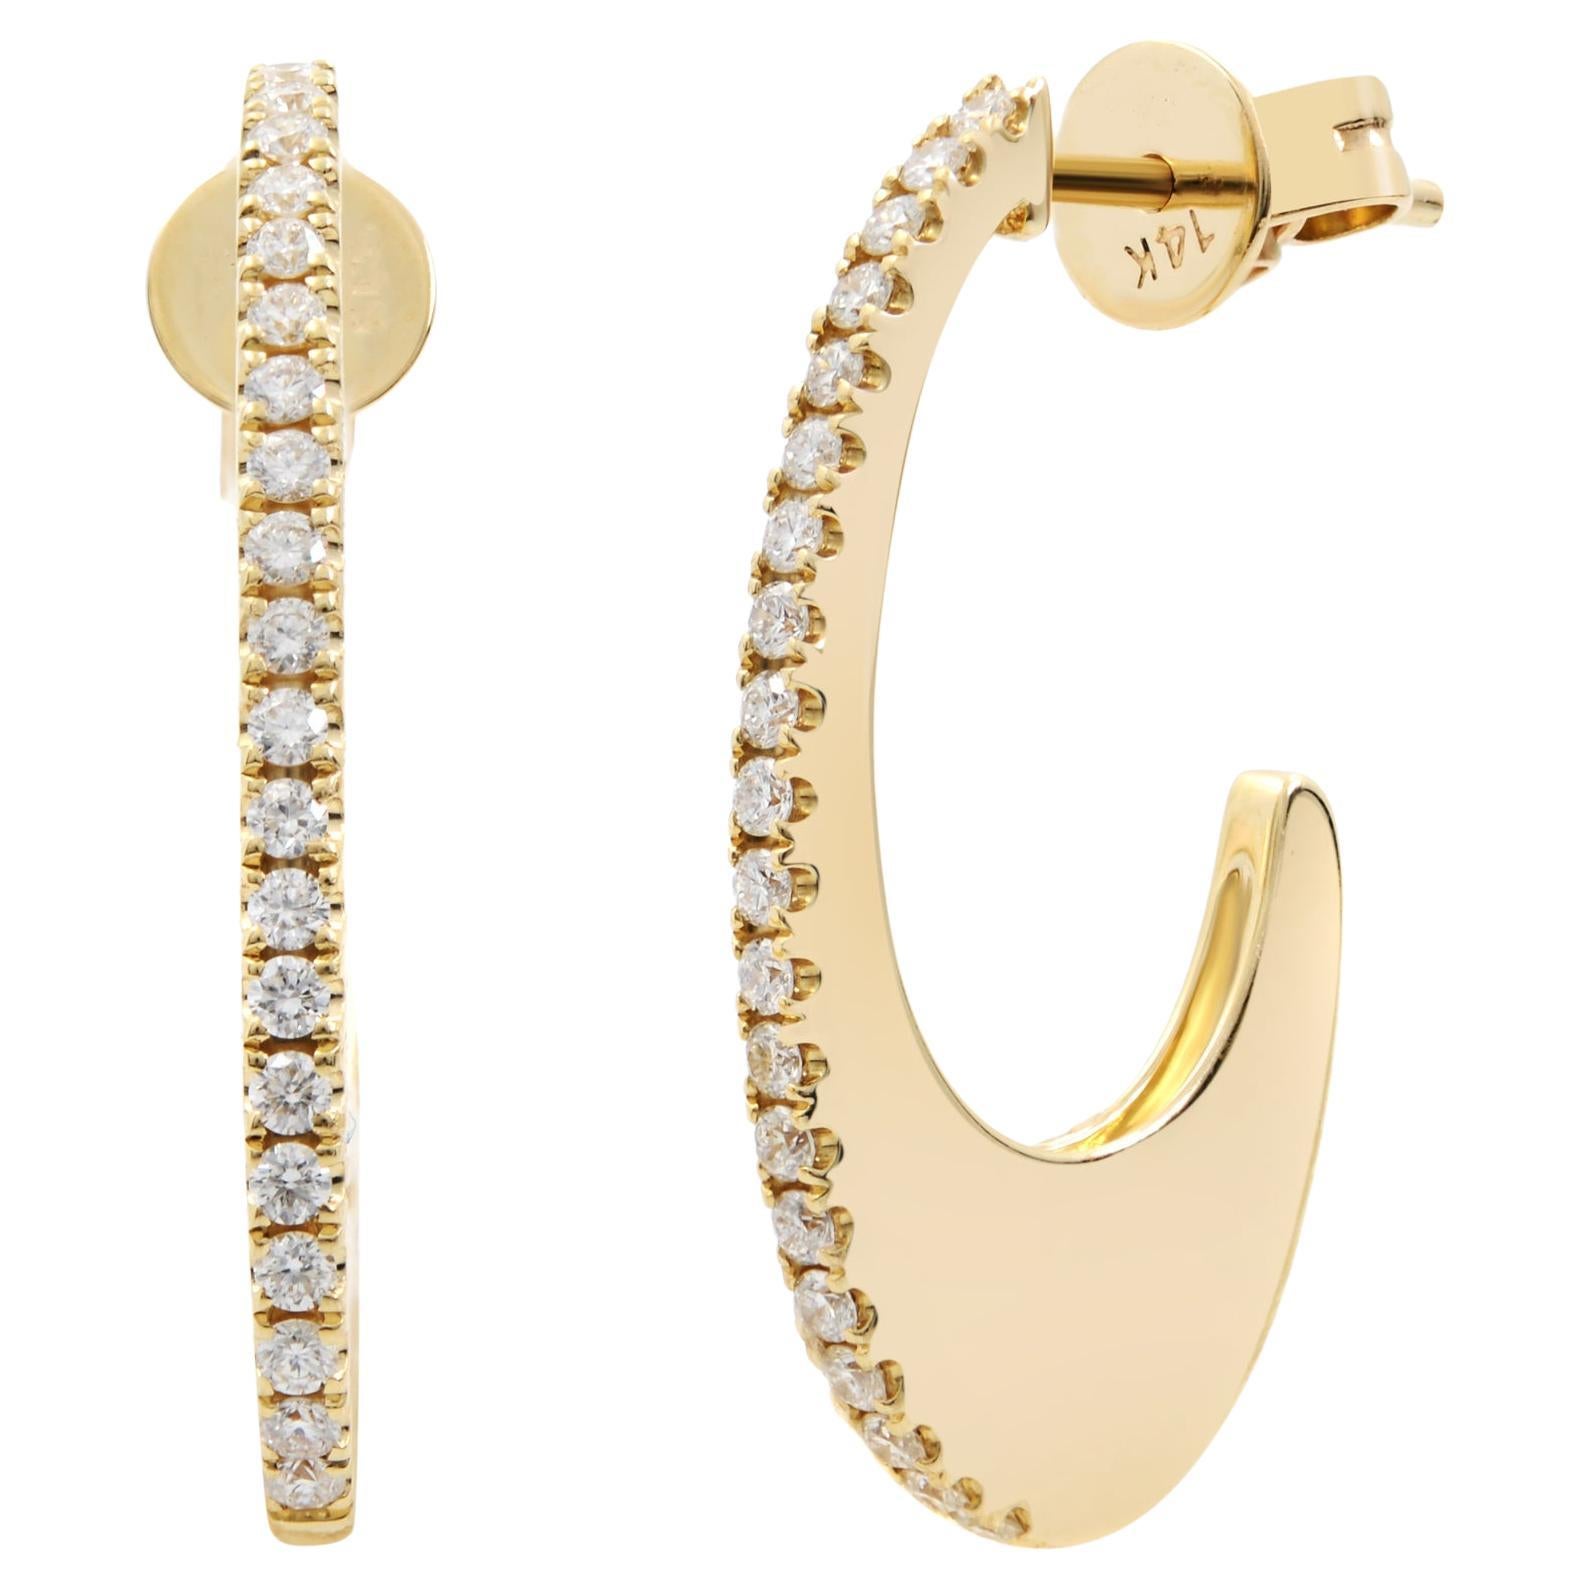 Rachel Koen Pave Diamond Oval Hoop Earrings 14K Yellow Gold 0.34Cttw For Sale